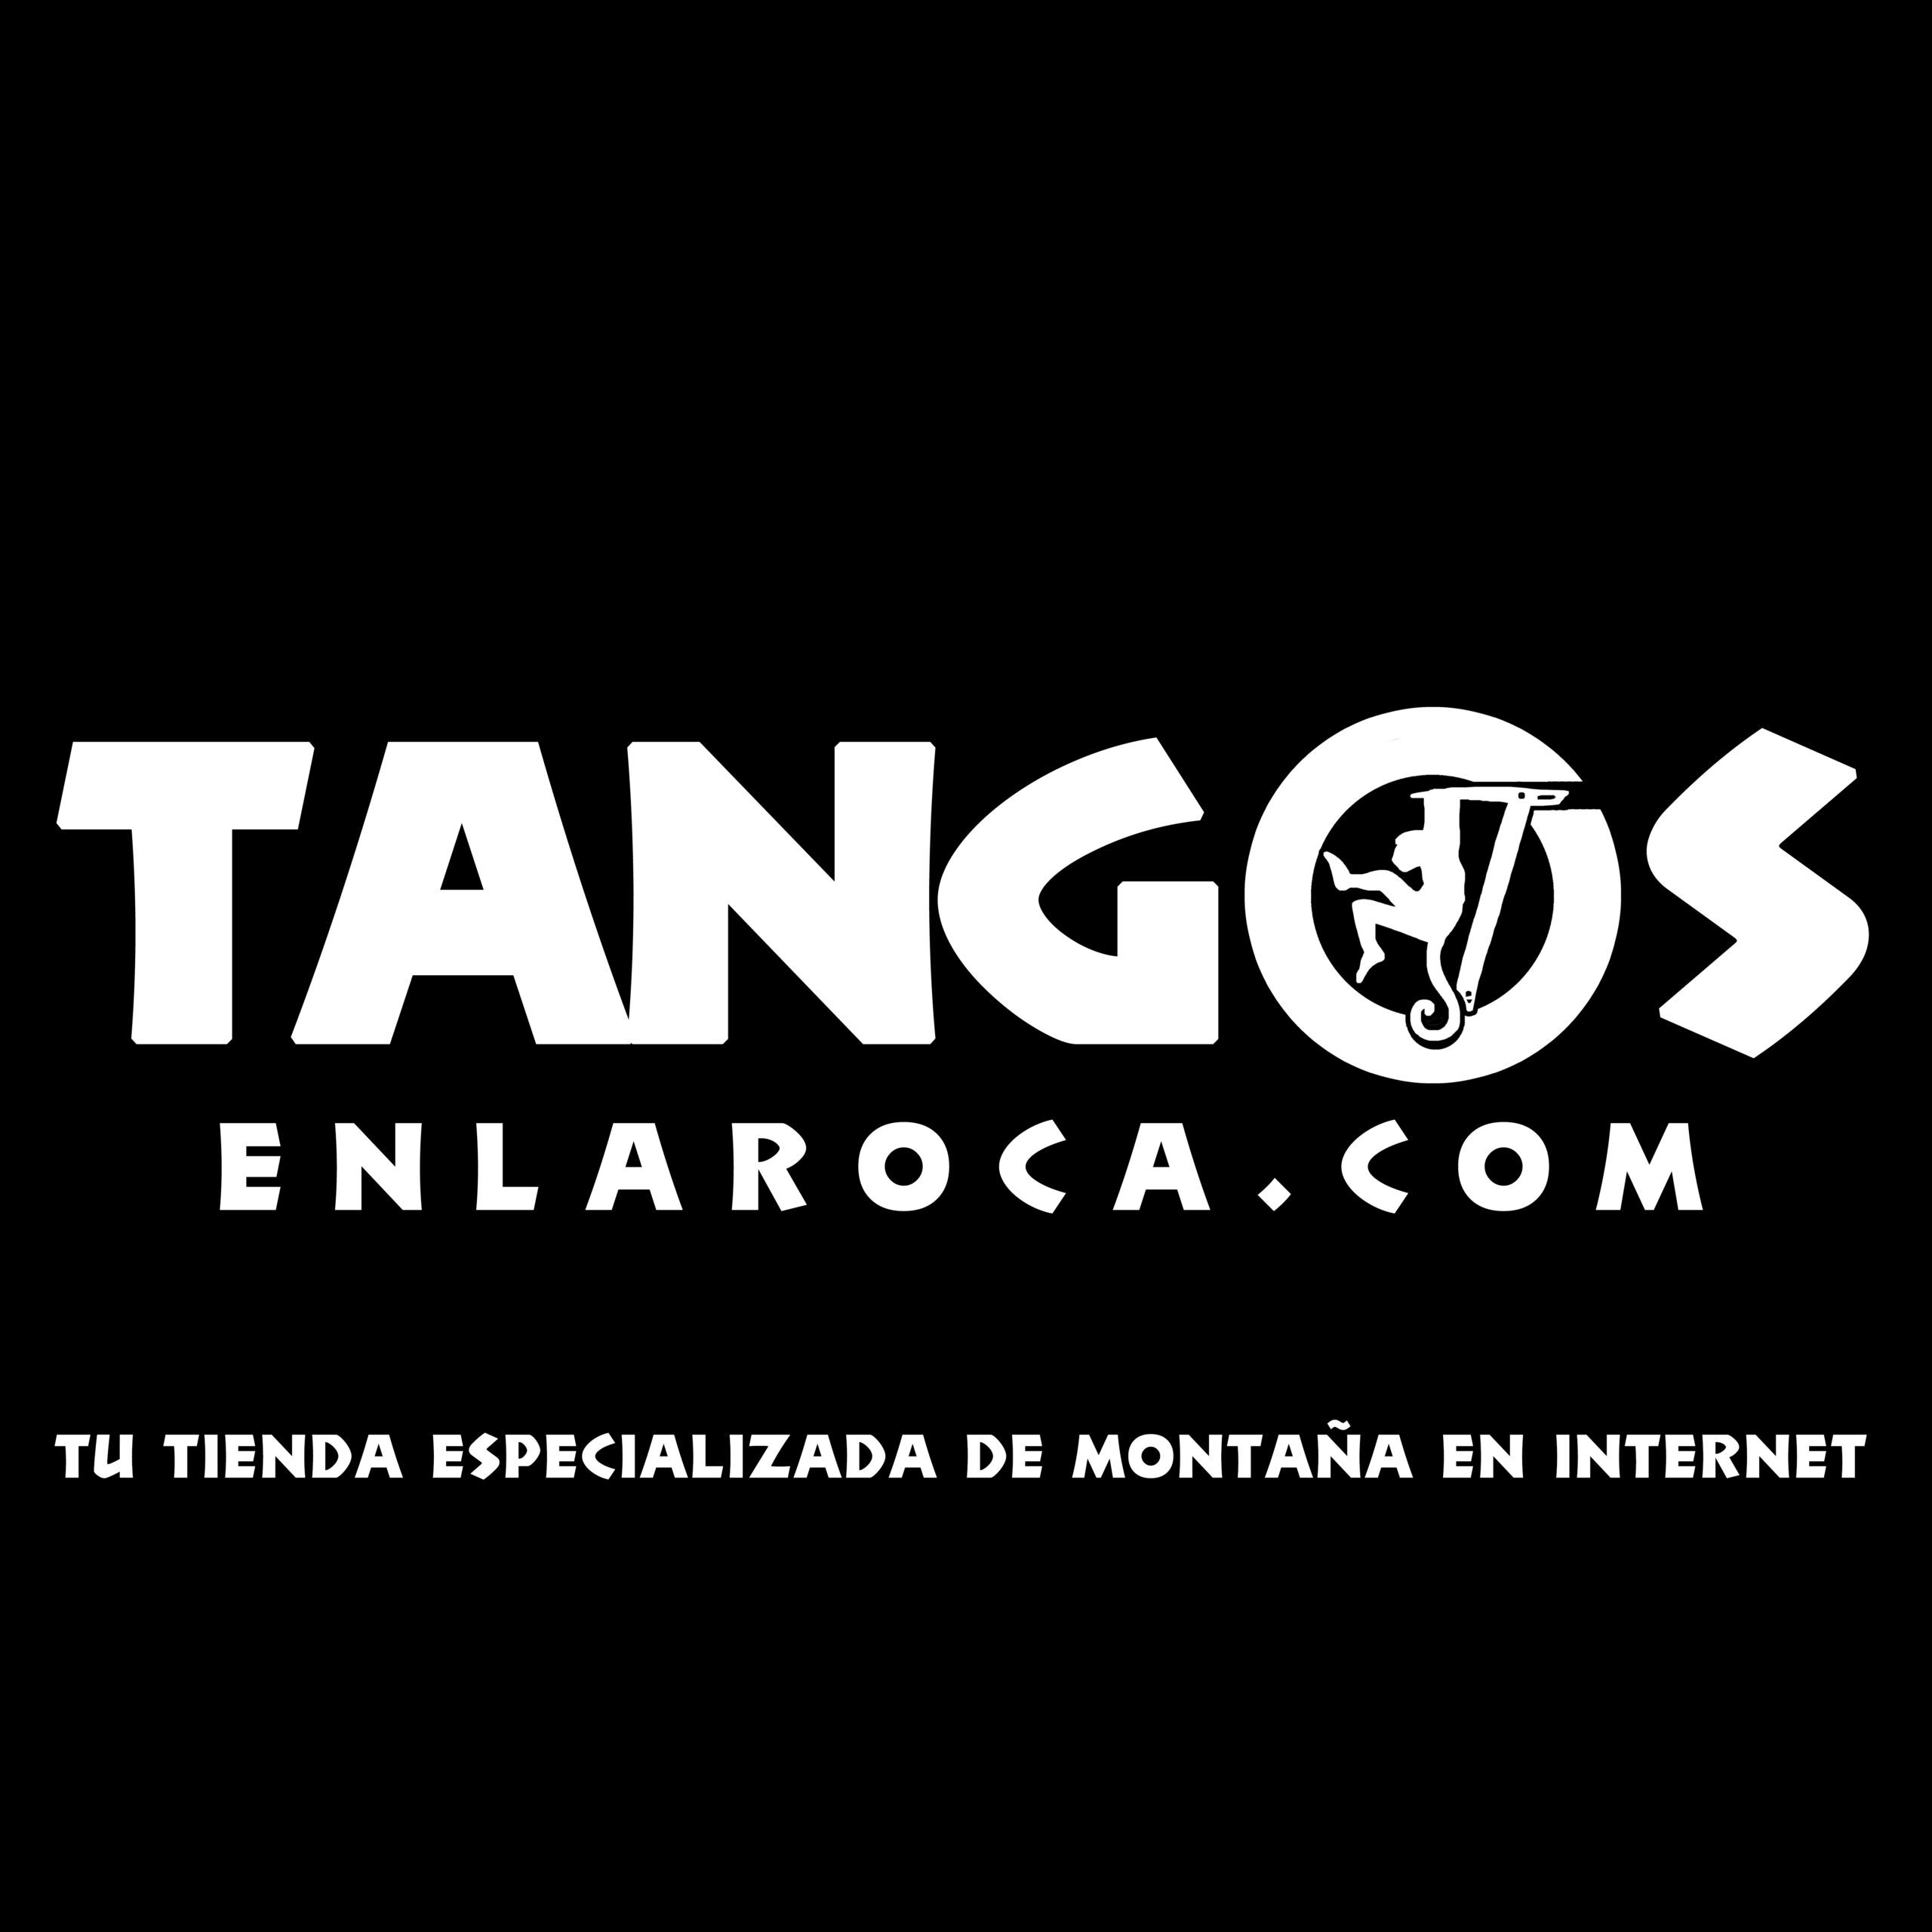 Tangosenlaroca.com